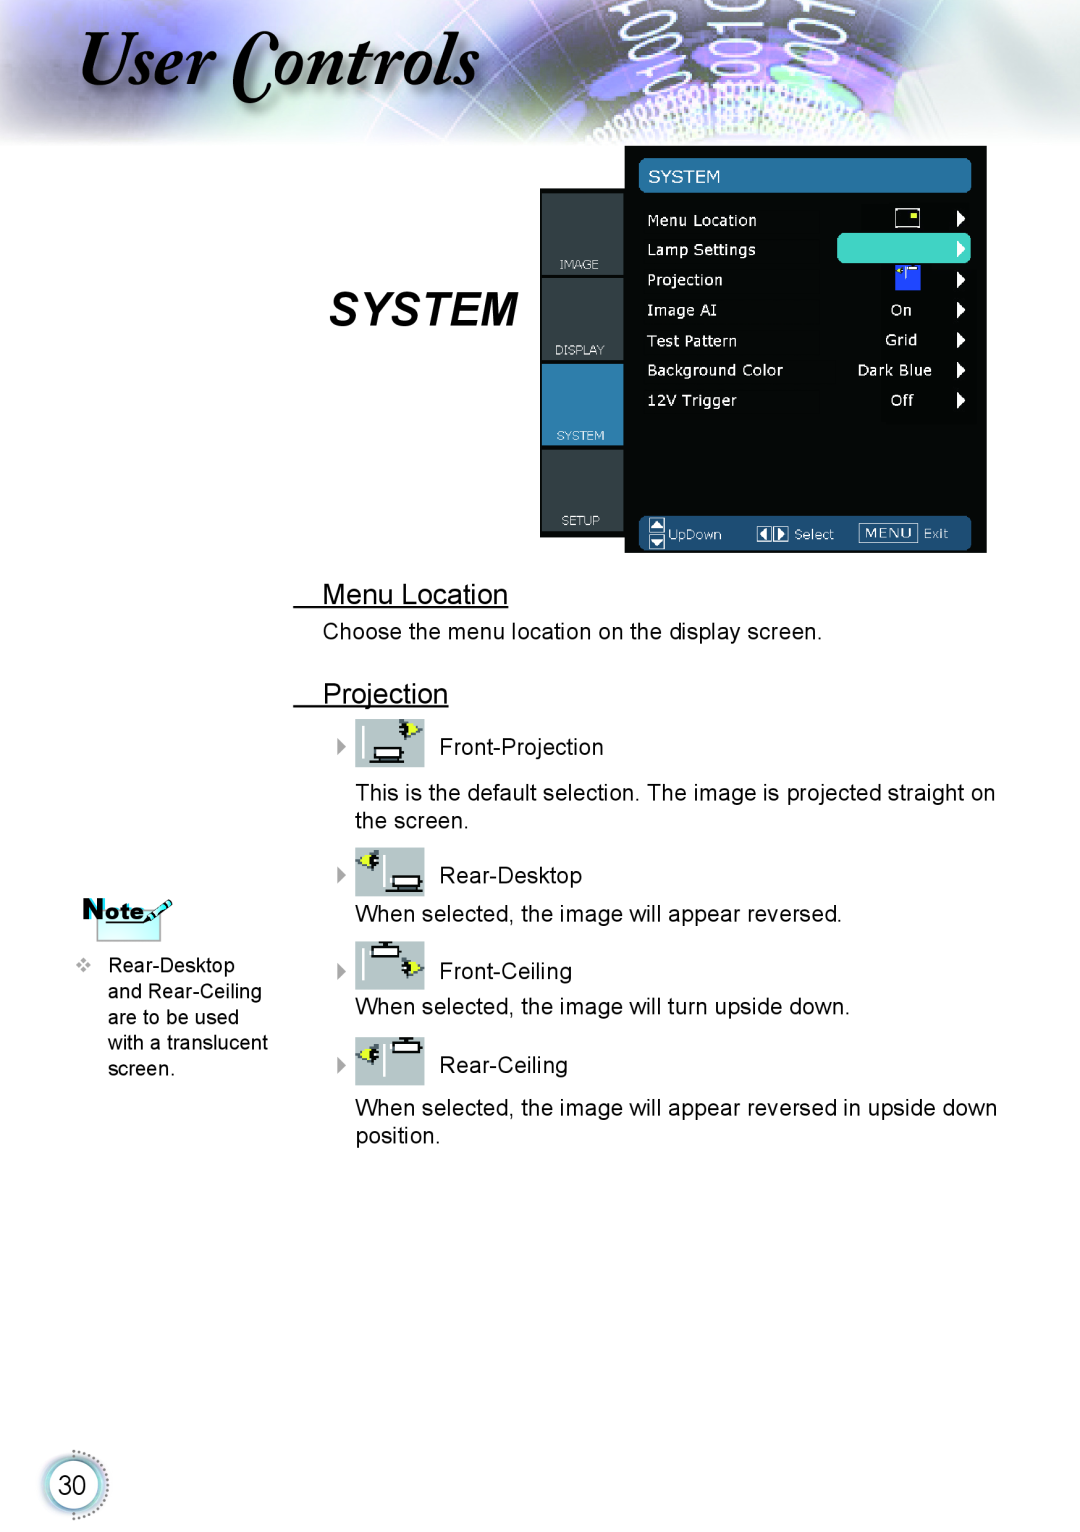 Optoma Technology HD20 manual System, Menu Location, Projection, ser ontrols 